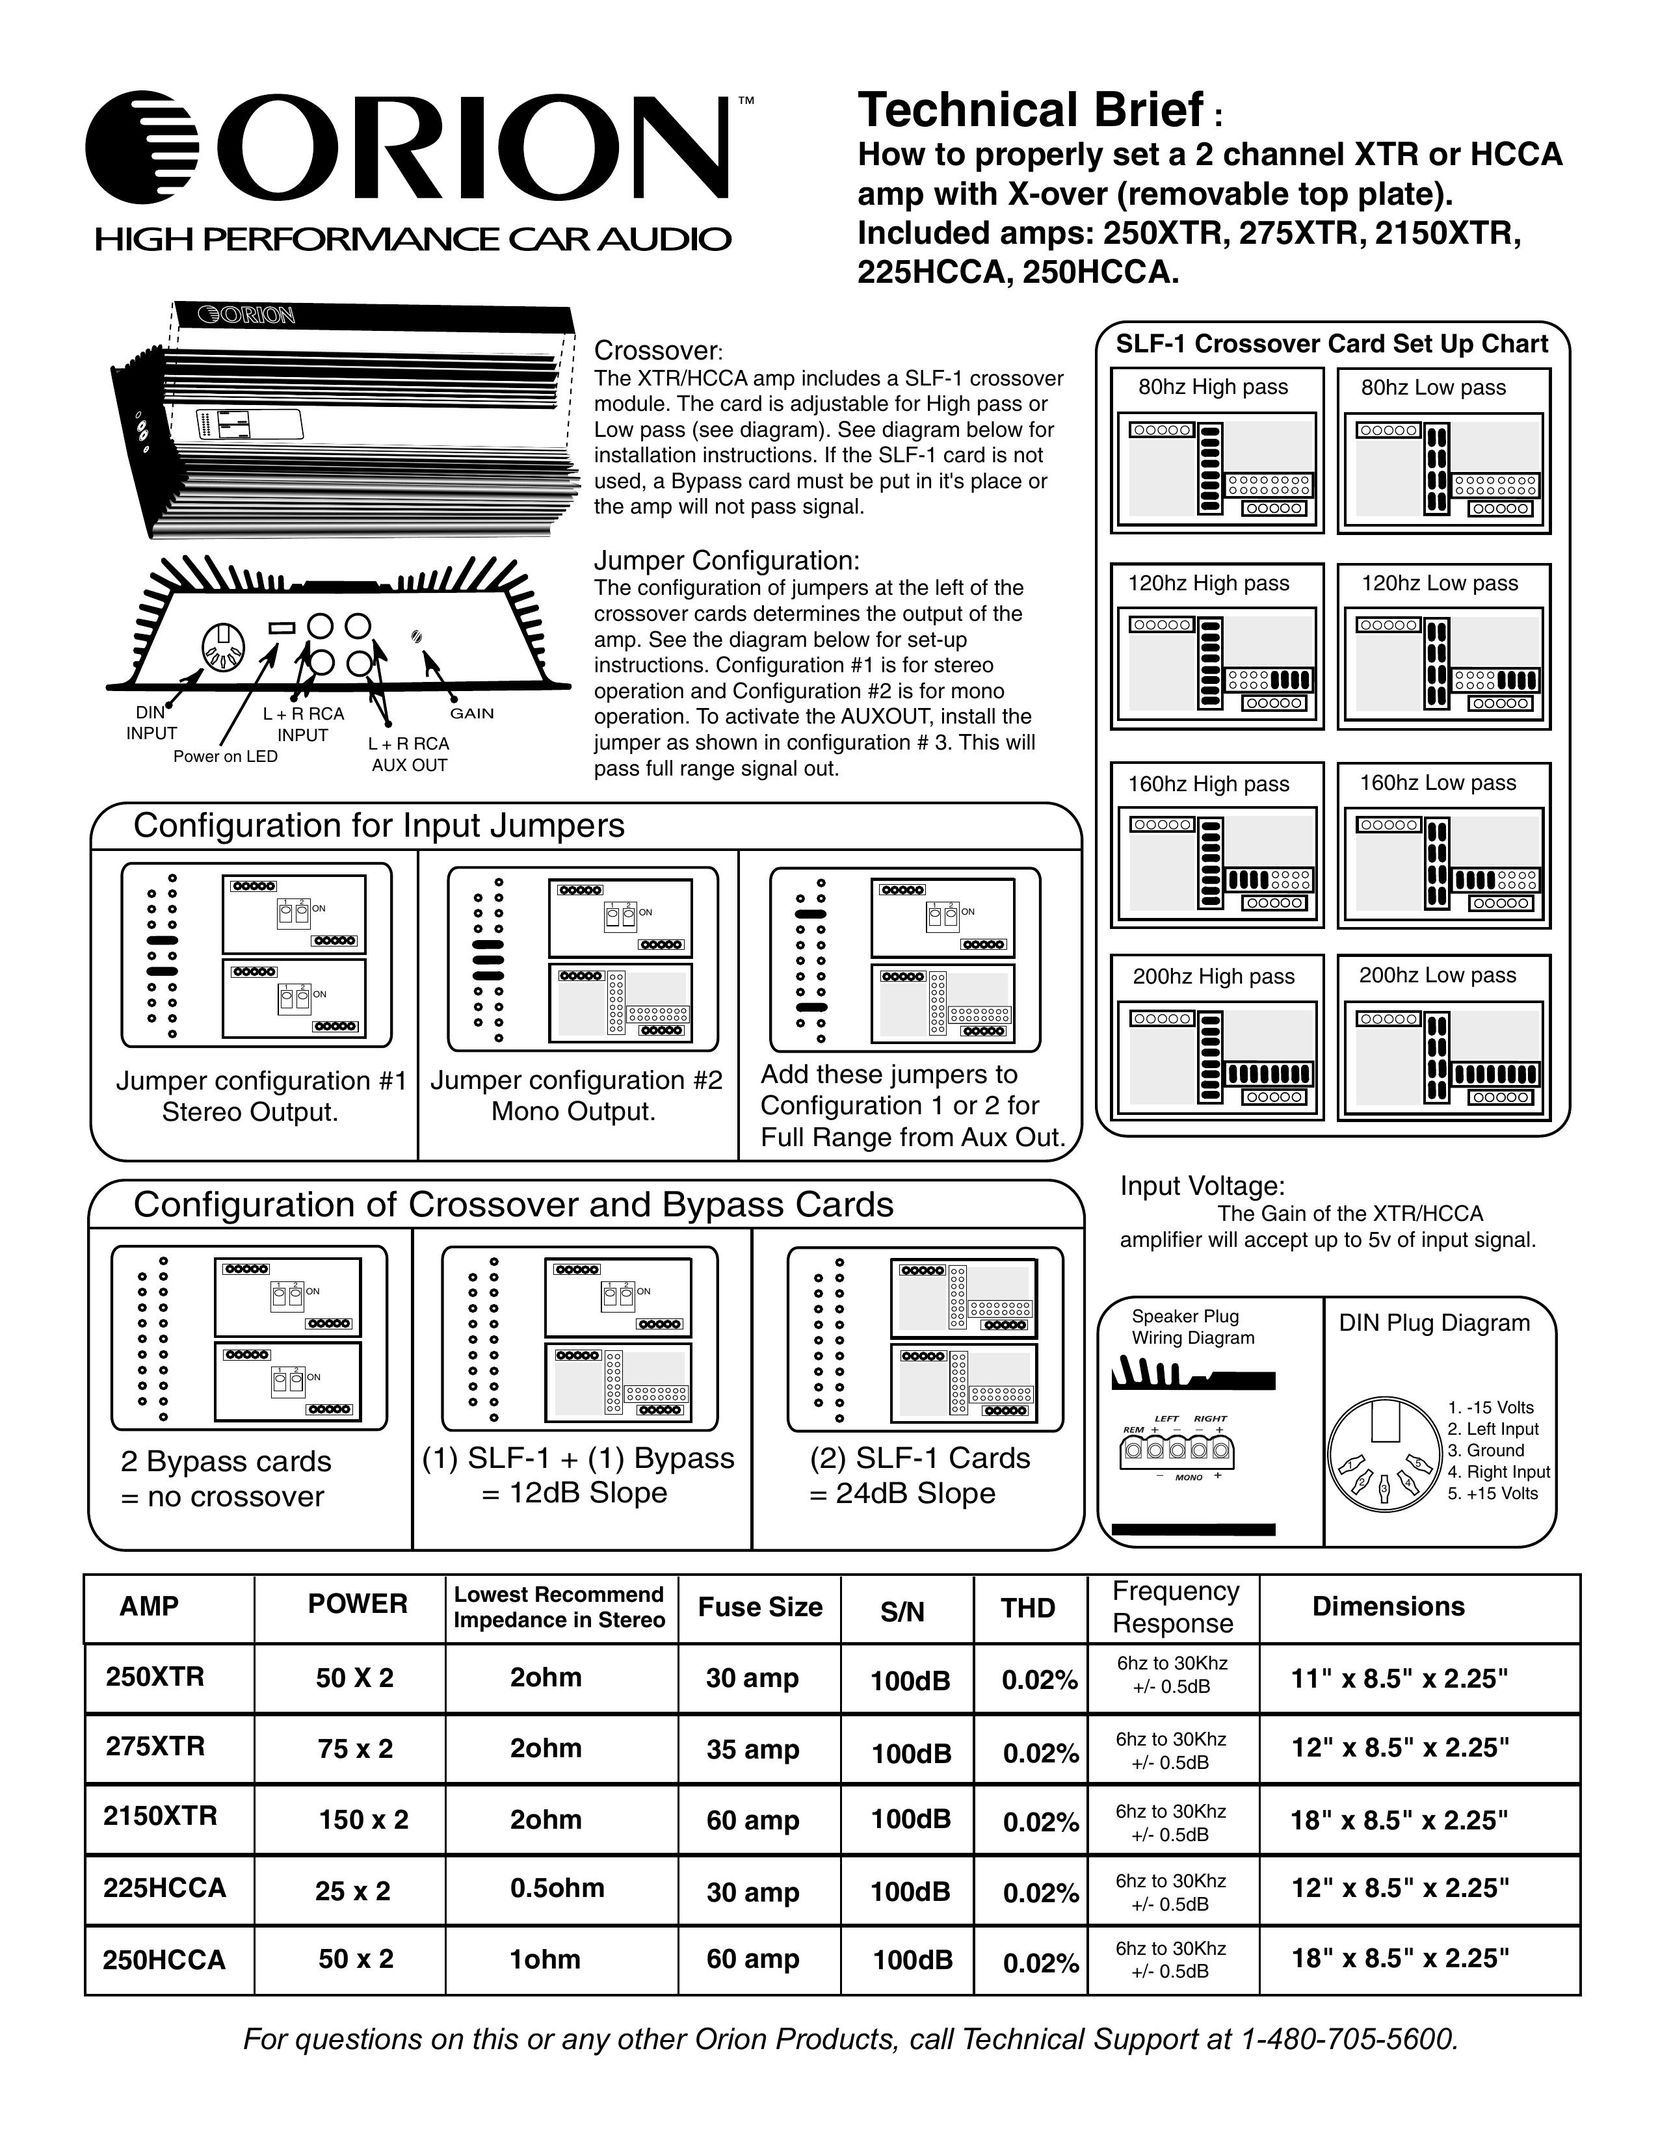 Orion Car Audio 275XTR Car Stereo System User Manual